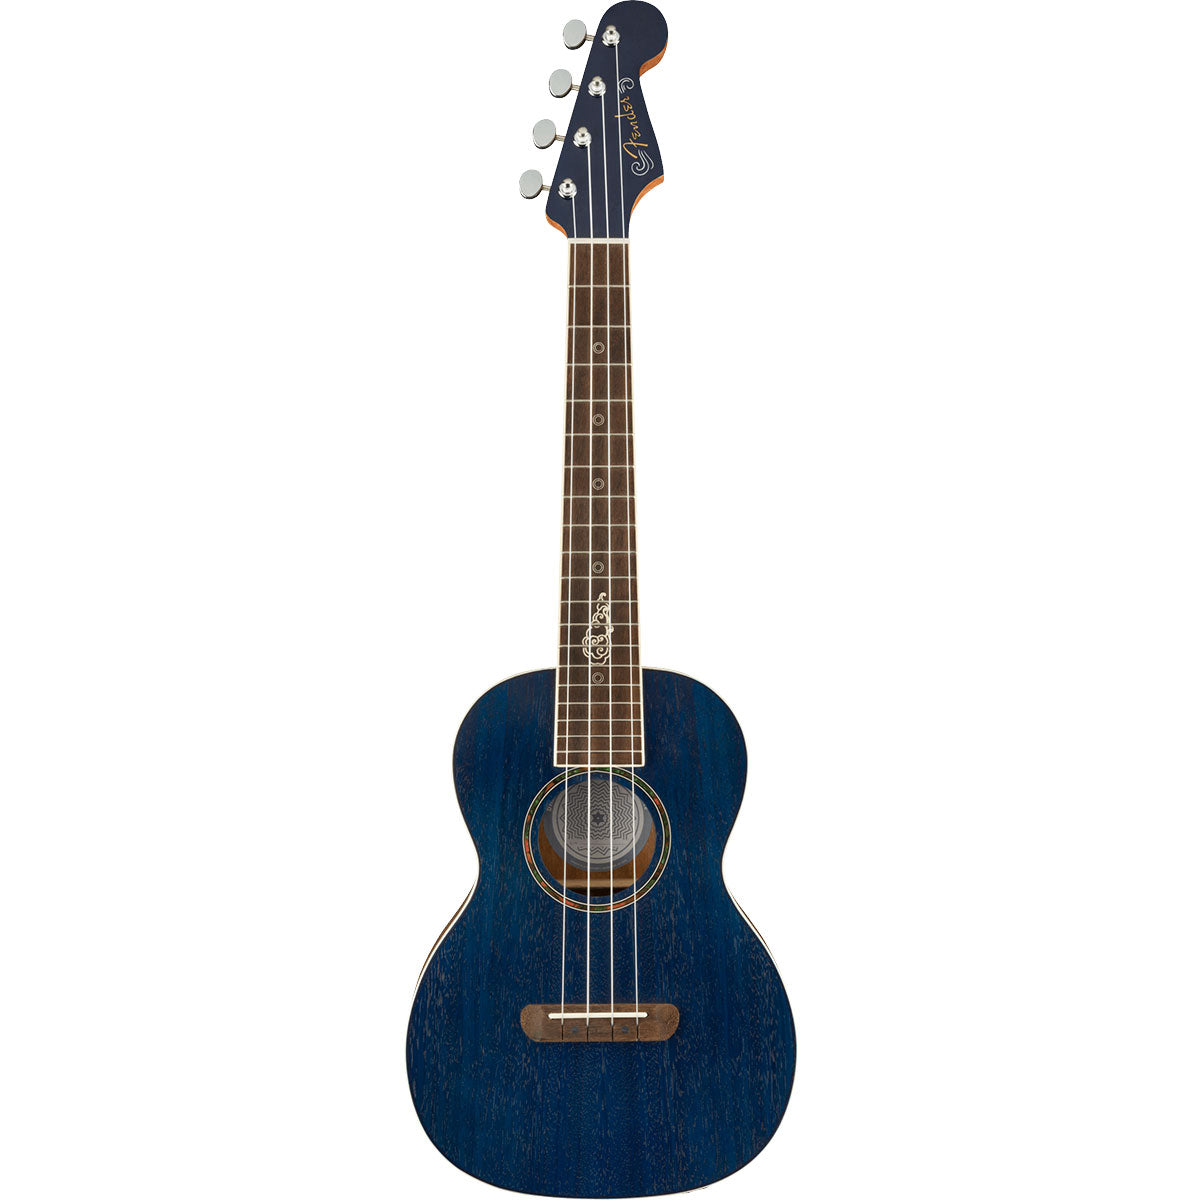 Top view of Fender Dhani Harrison Signature Ukulele - Sapphire Blue